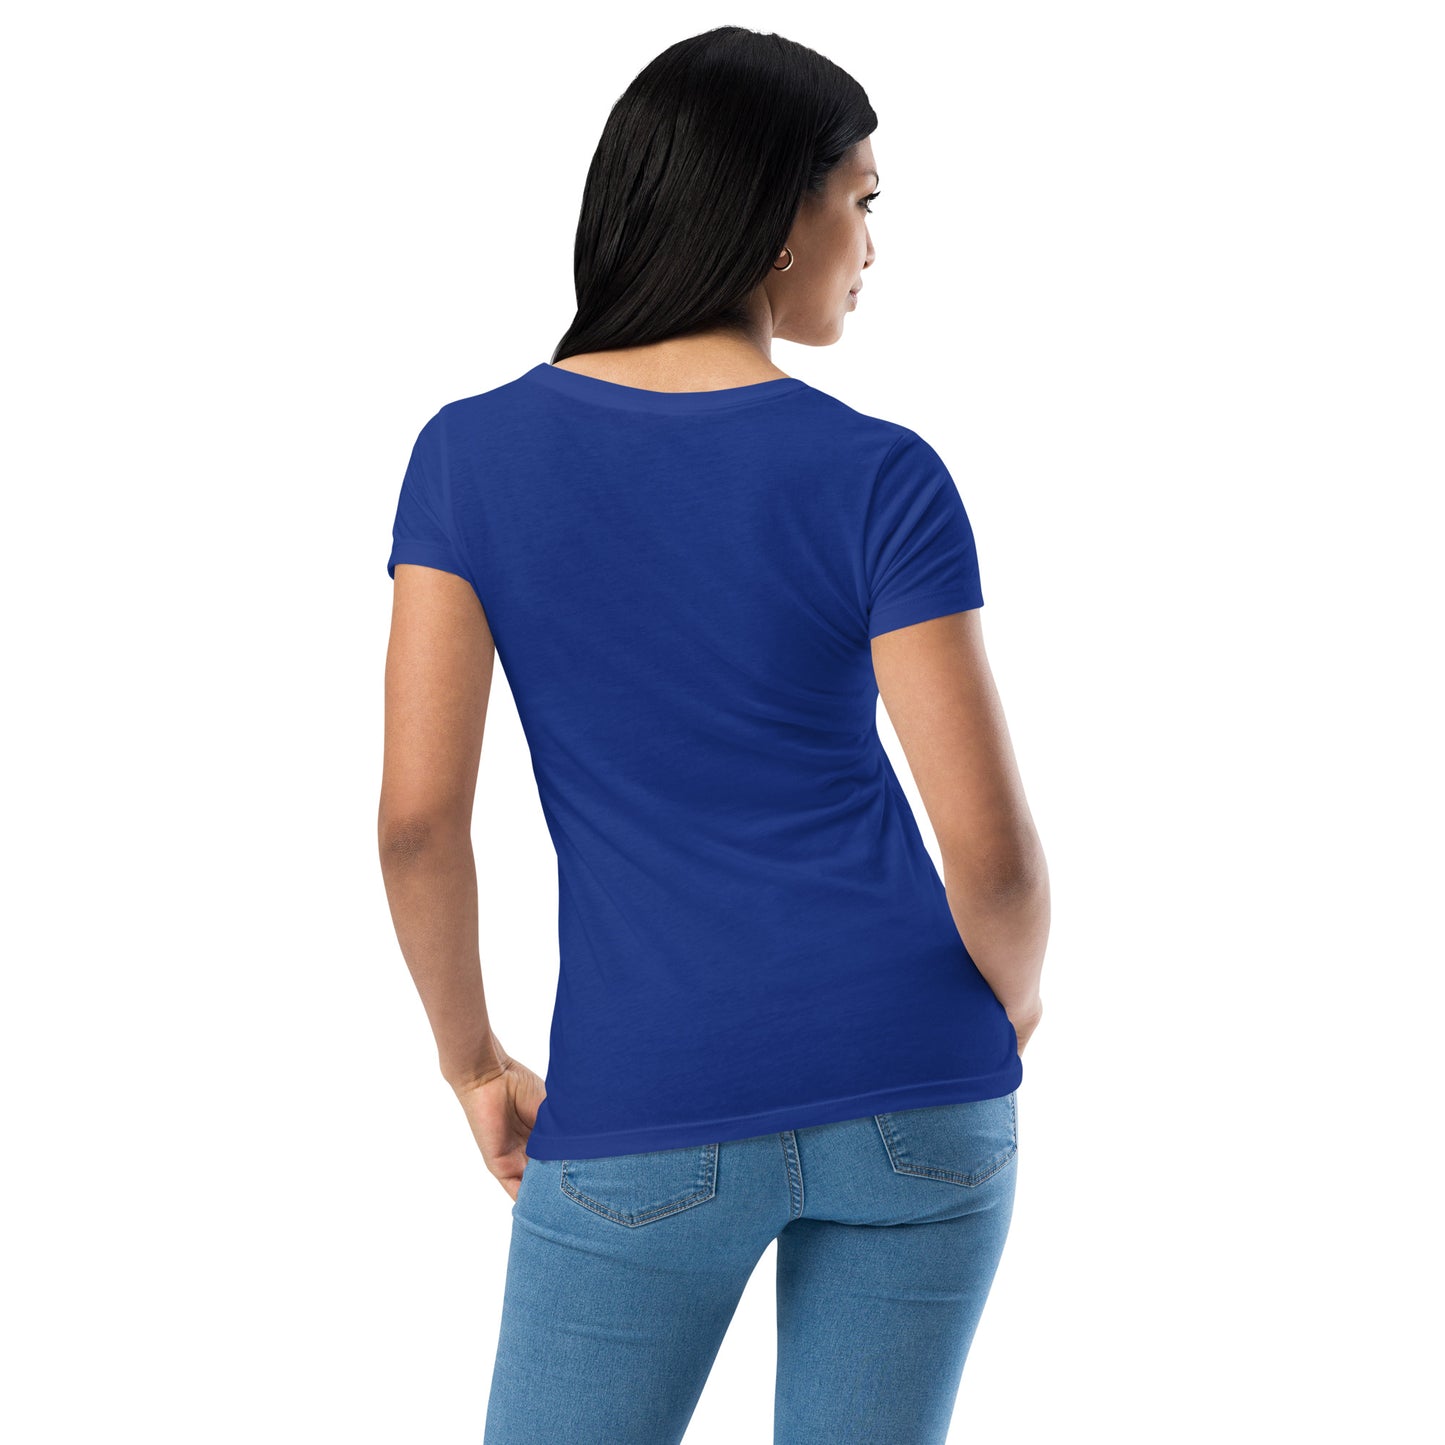 Women’s Fitted T-Shirt Super Soft & Stretchy Slim Fit Next Level Magical Sea Horse Design by IOBI Original Apparel